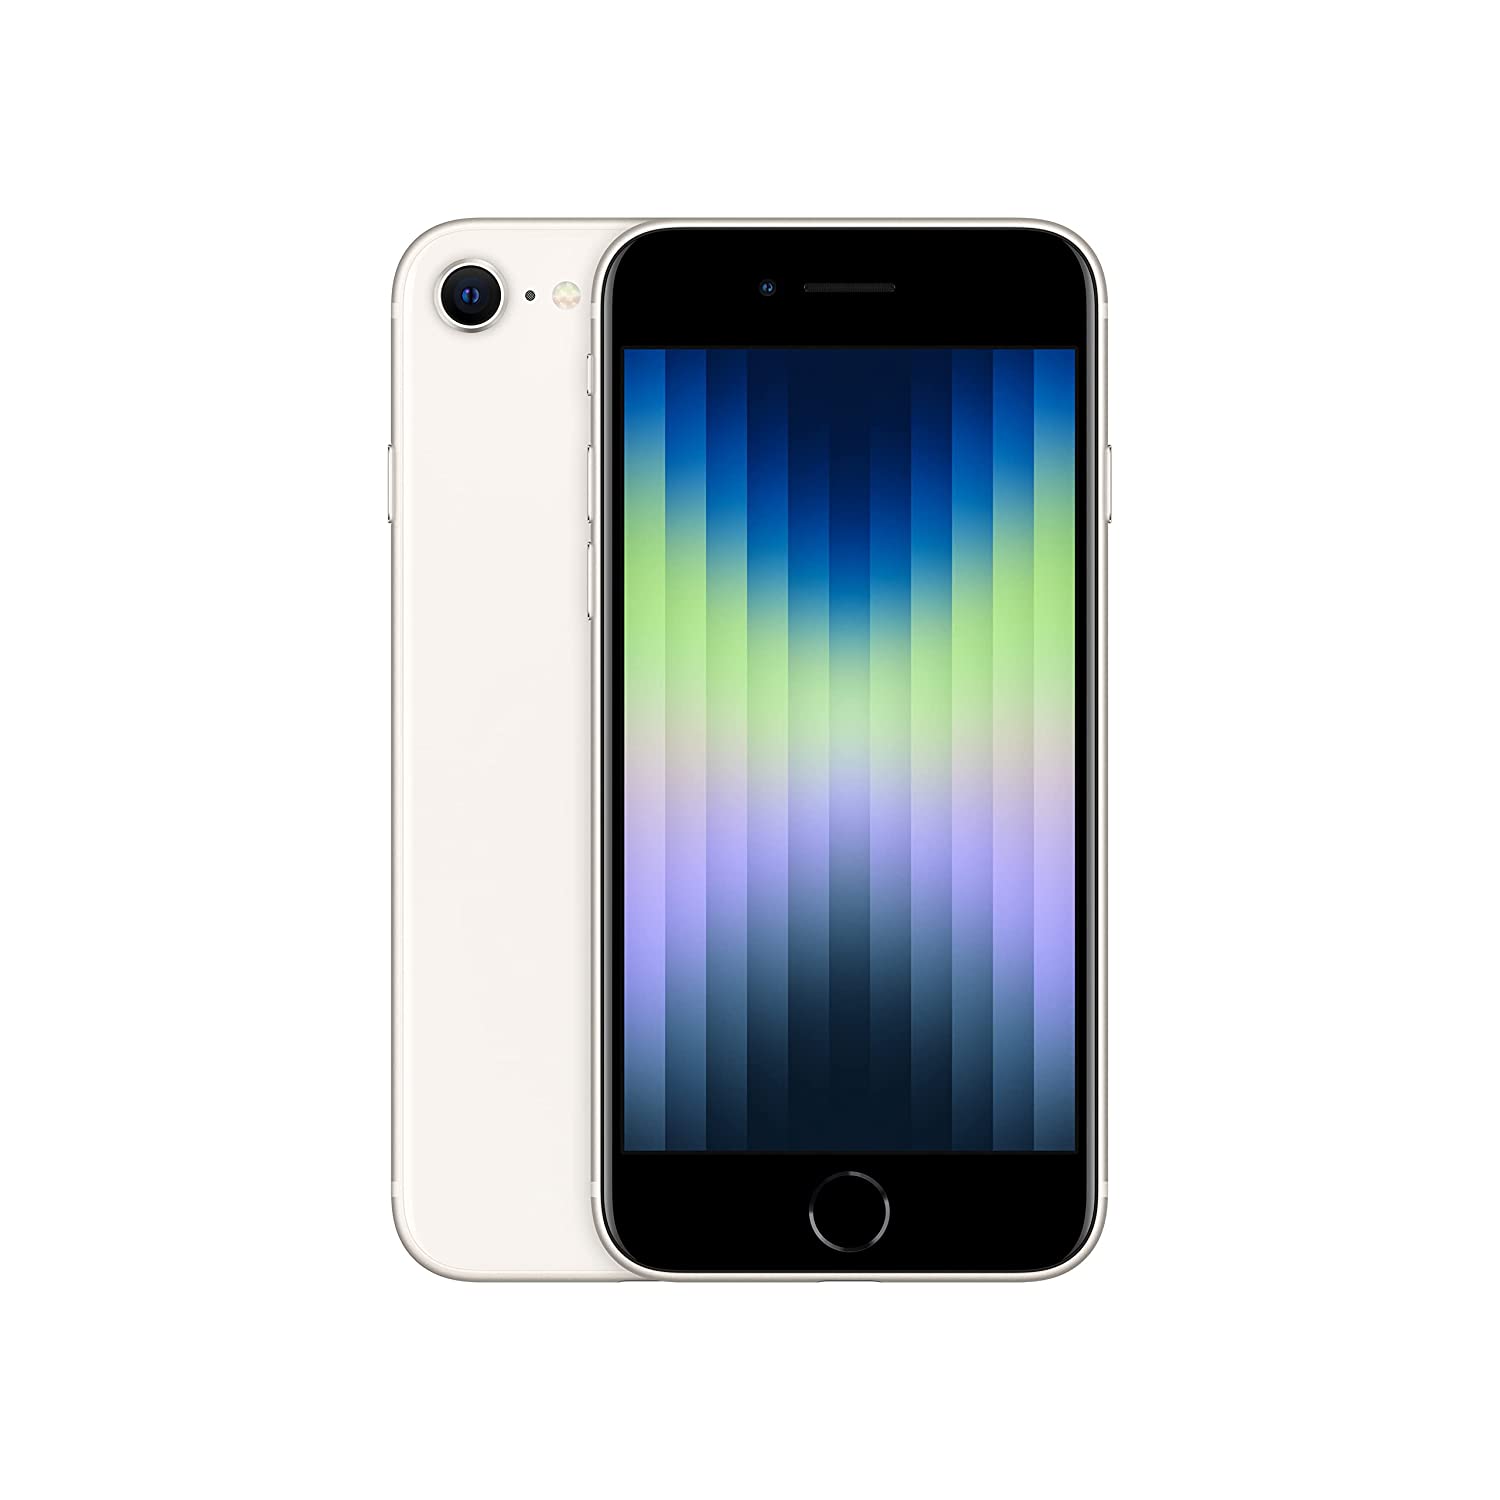 Apple iPhone SE (64 GB) – Starlight (3rd Generation)